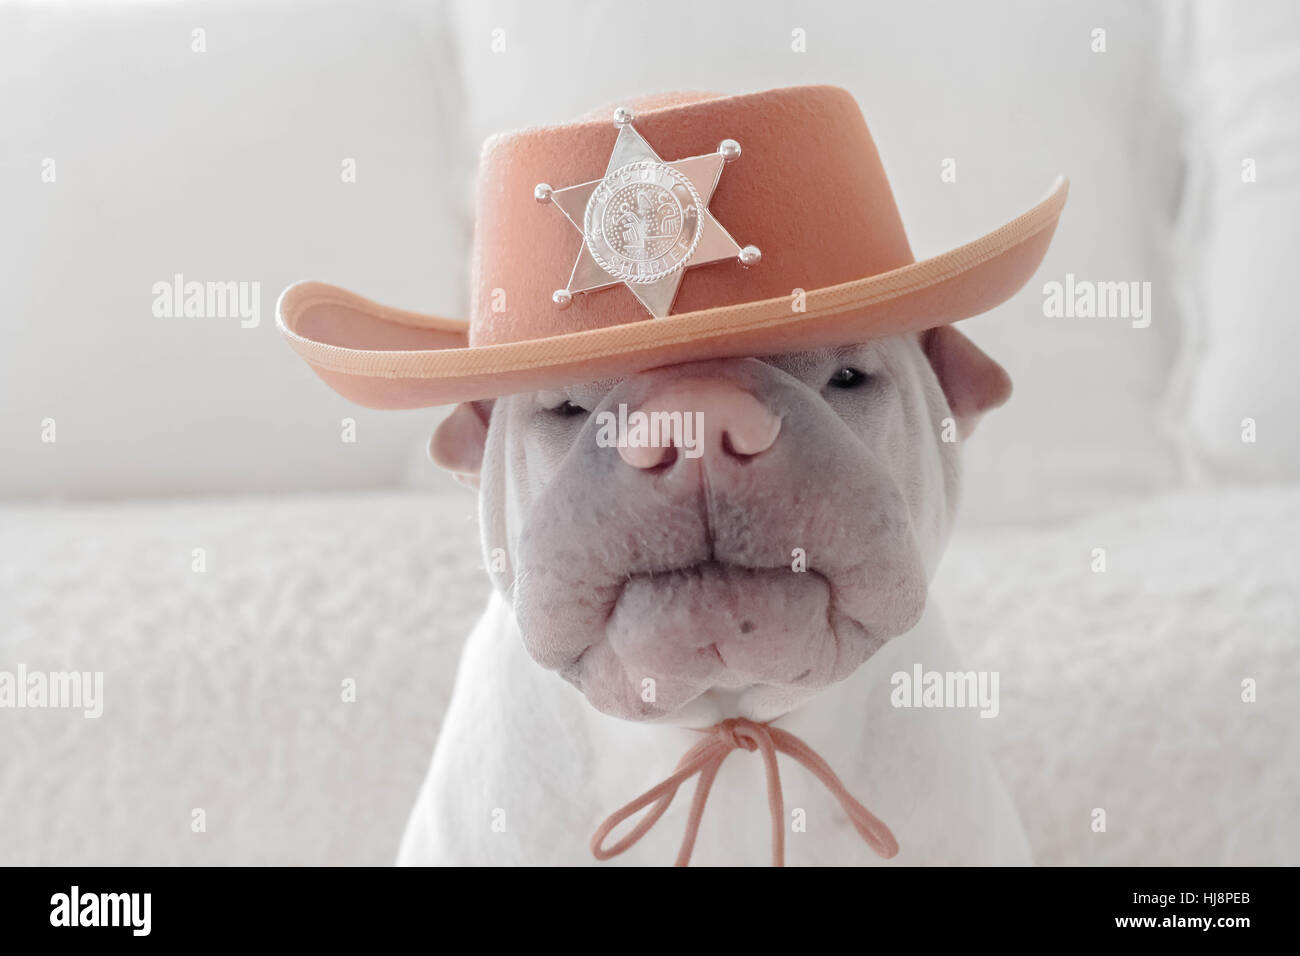 Shar pei dog dressed as a Deputy sheriff Stock Photo